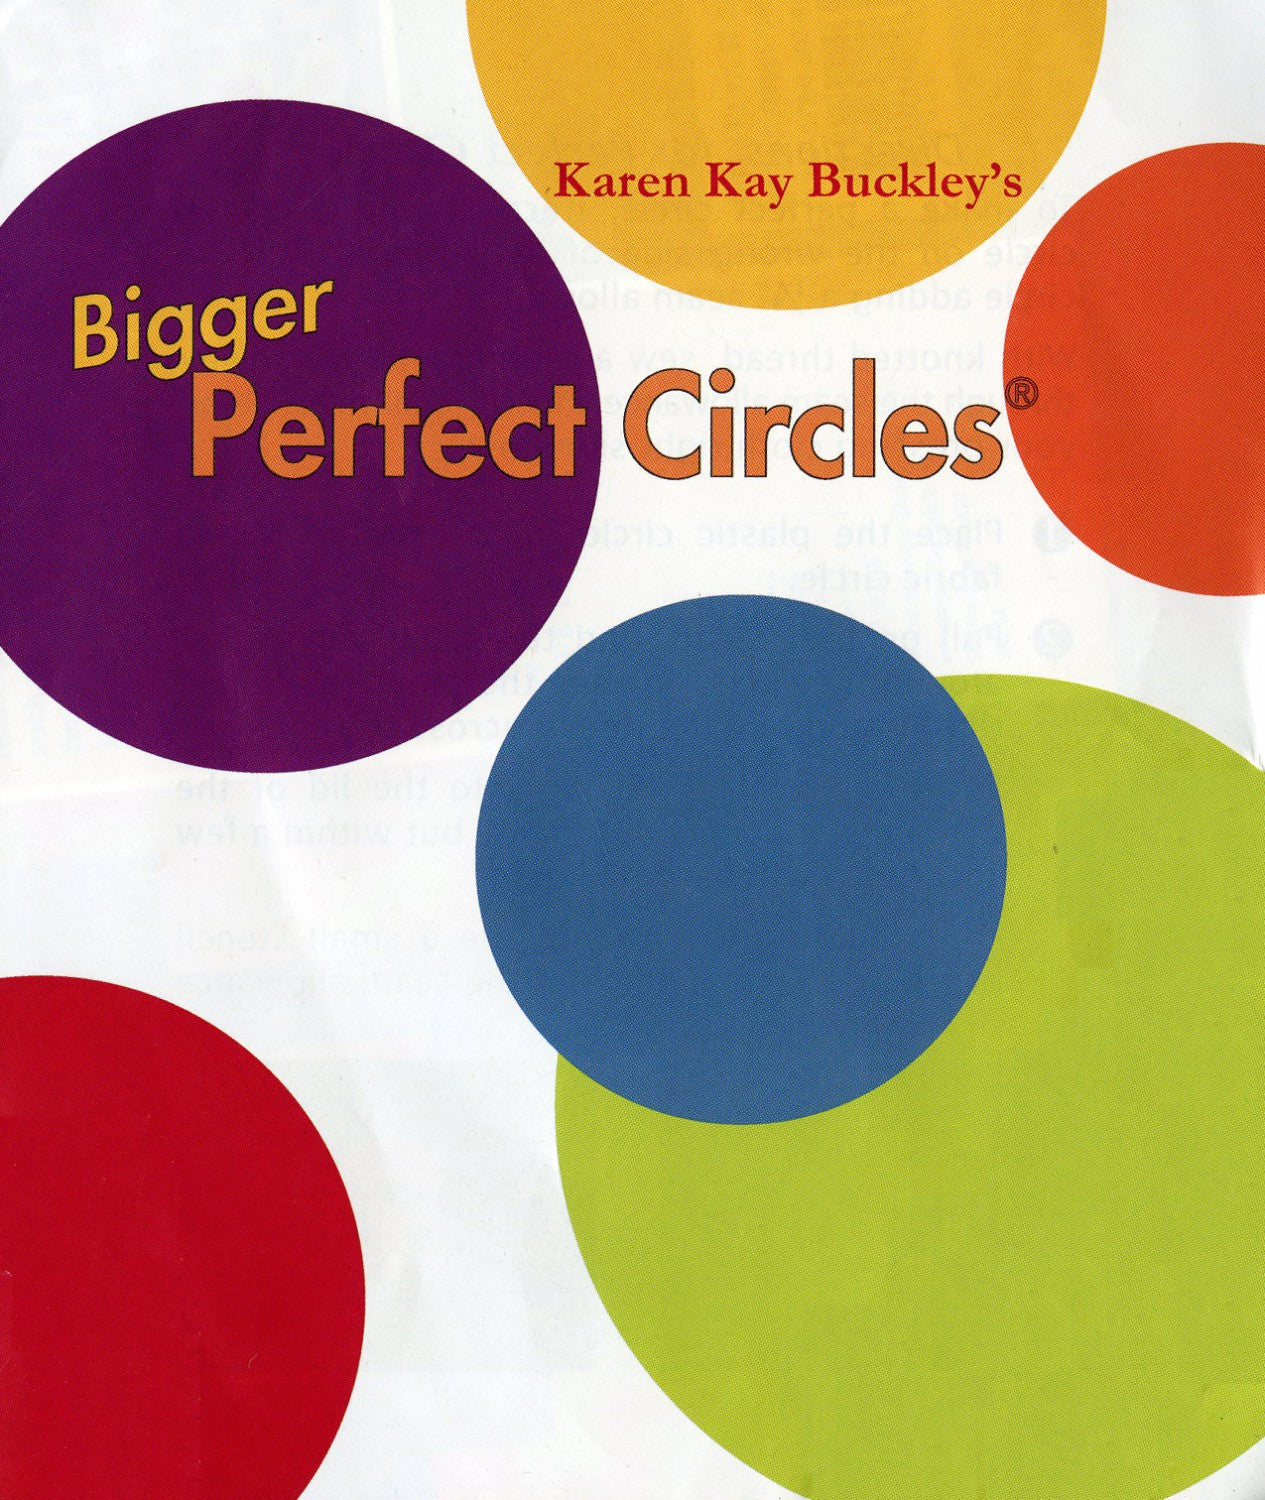 Bigger Perfect Circles Templates